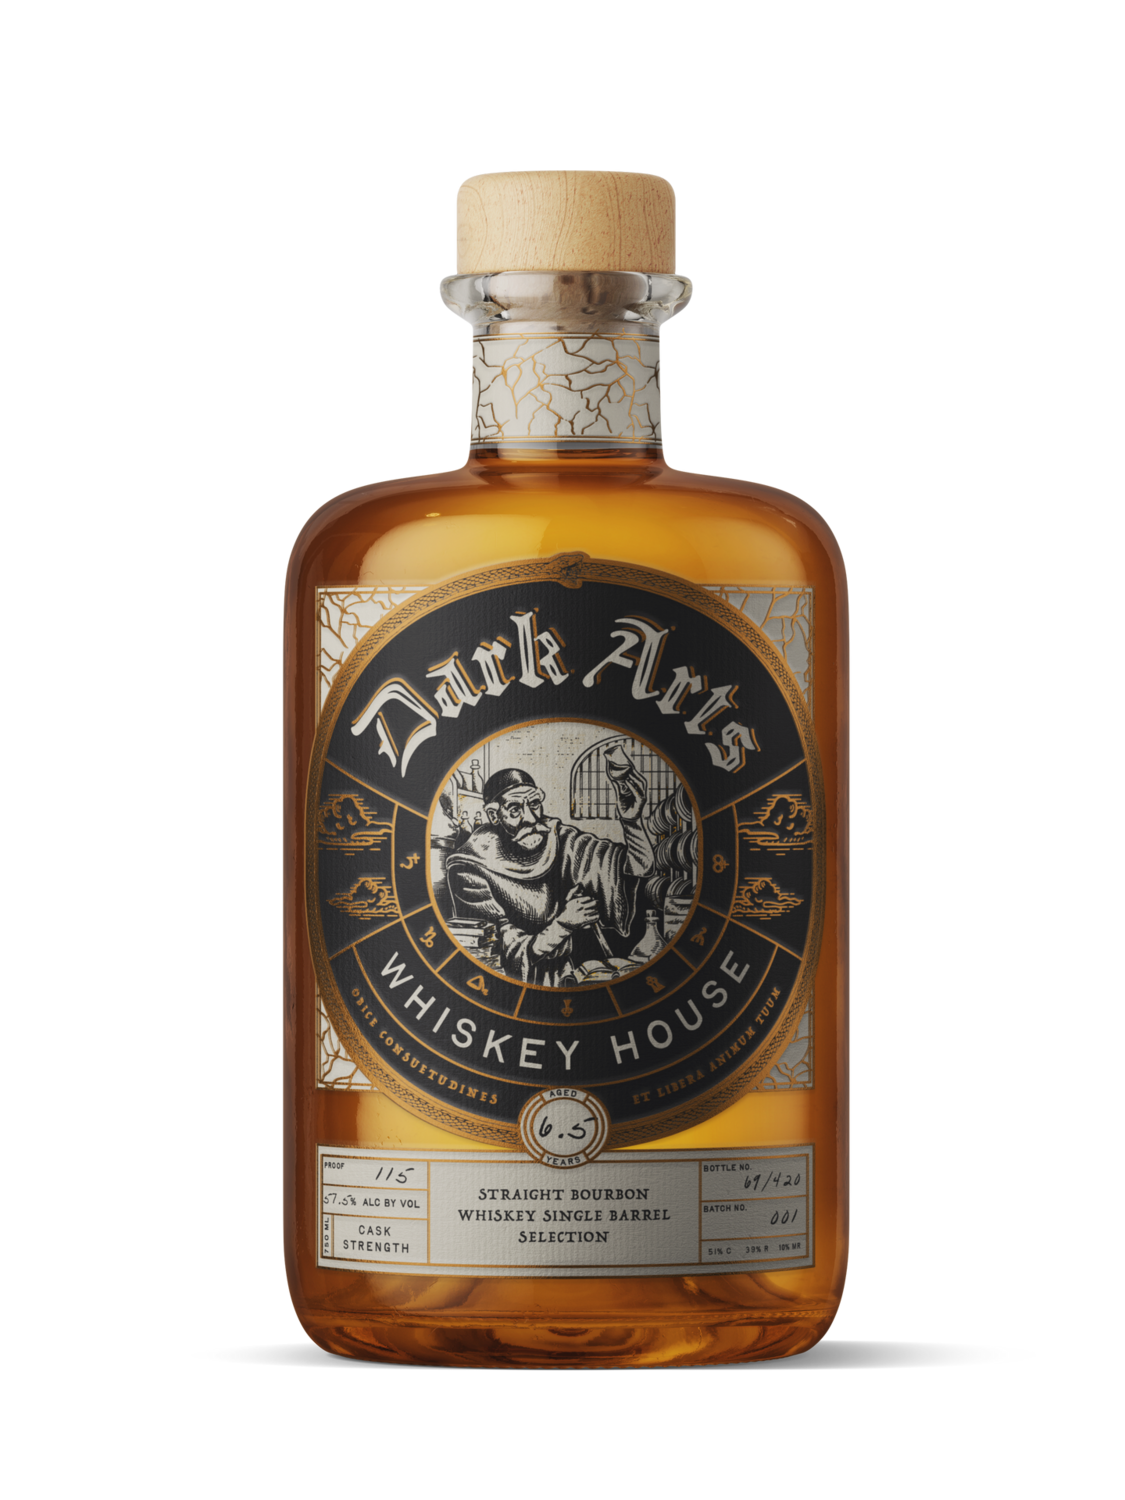 Dark Arts Whiskey House Cask Strength Bourbon 58.% 750ml